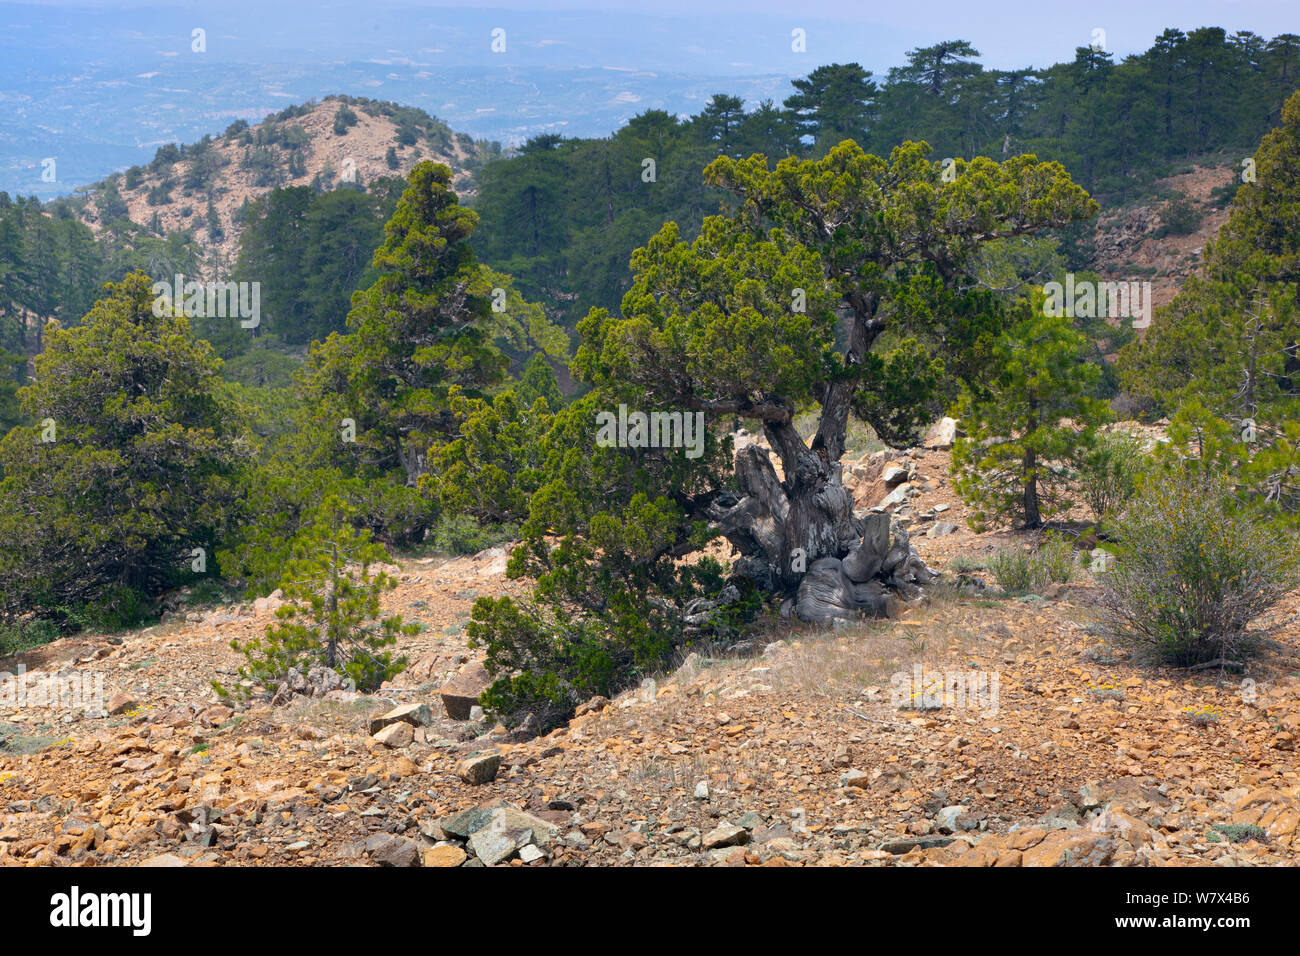 Ancient Juniper trees (Juniperus foetidissima), Troodos National Park, Cyprus, May. Stock Photo